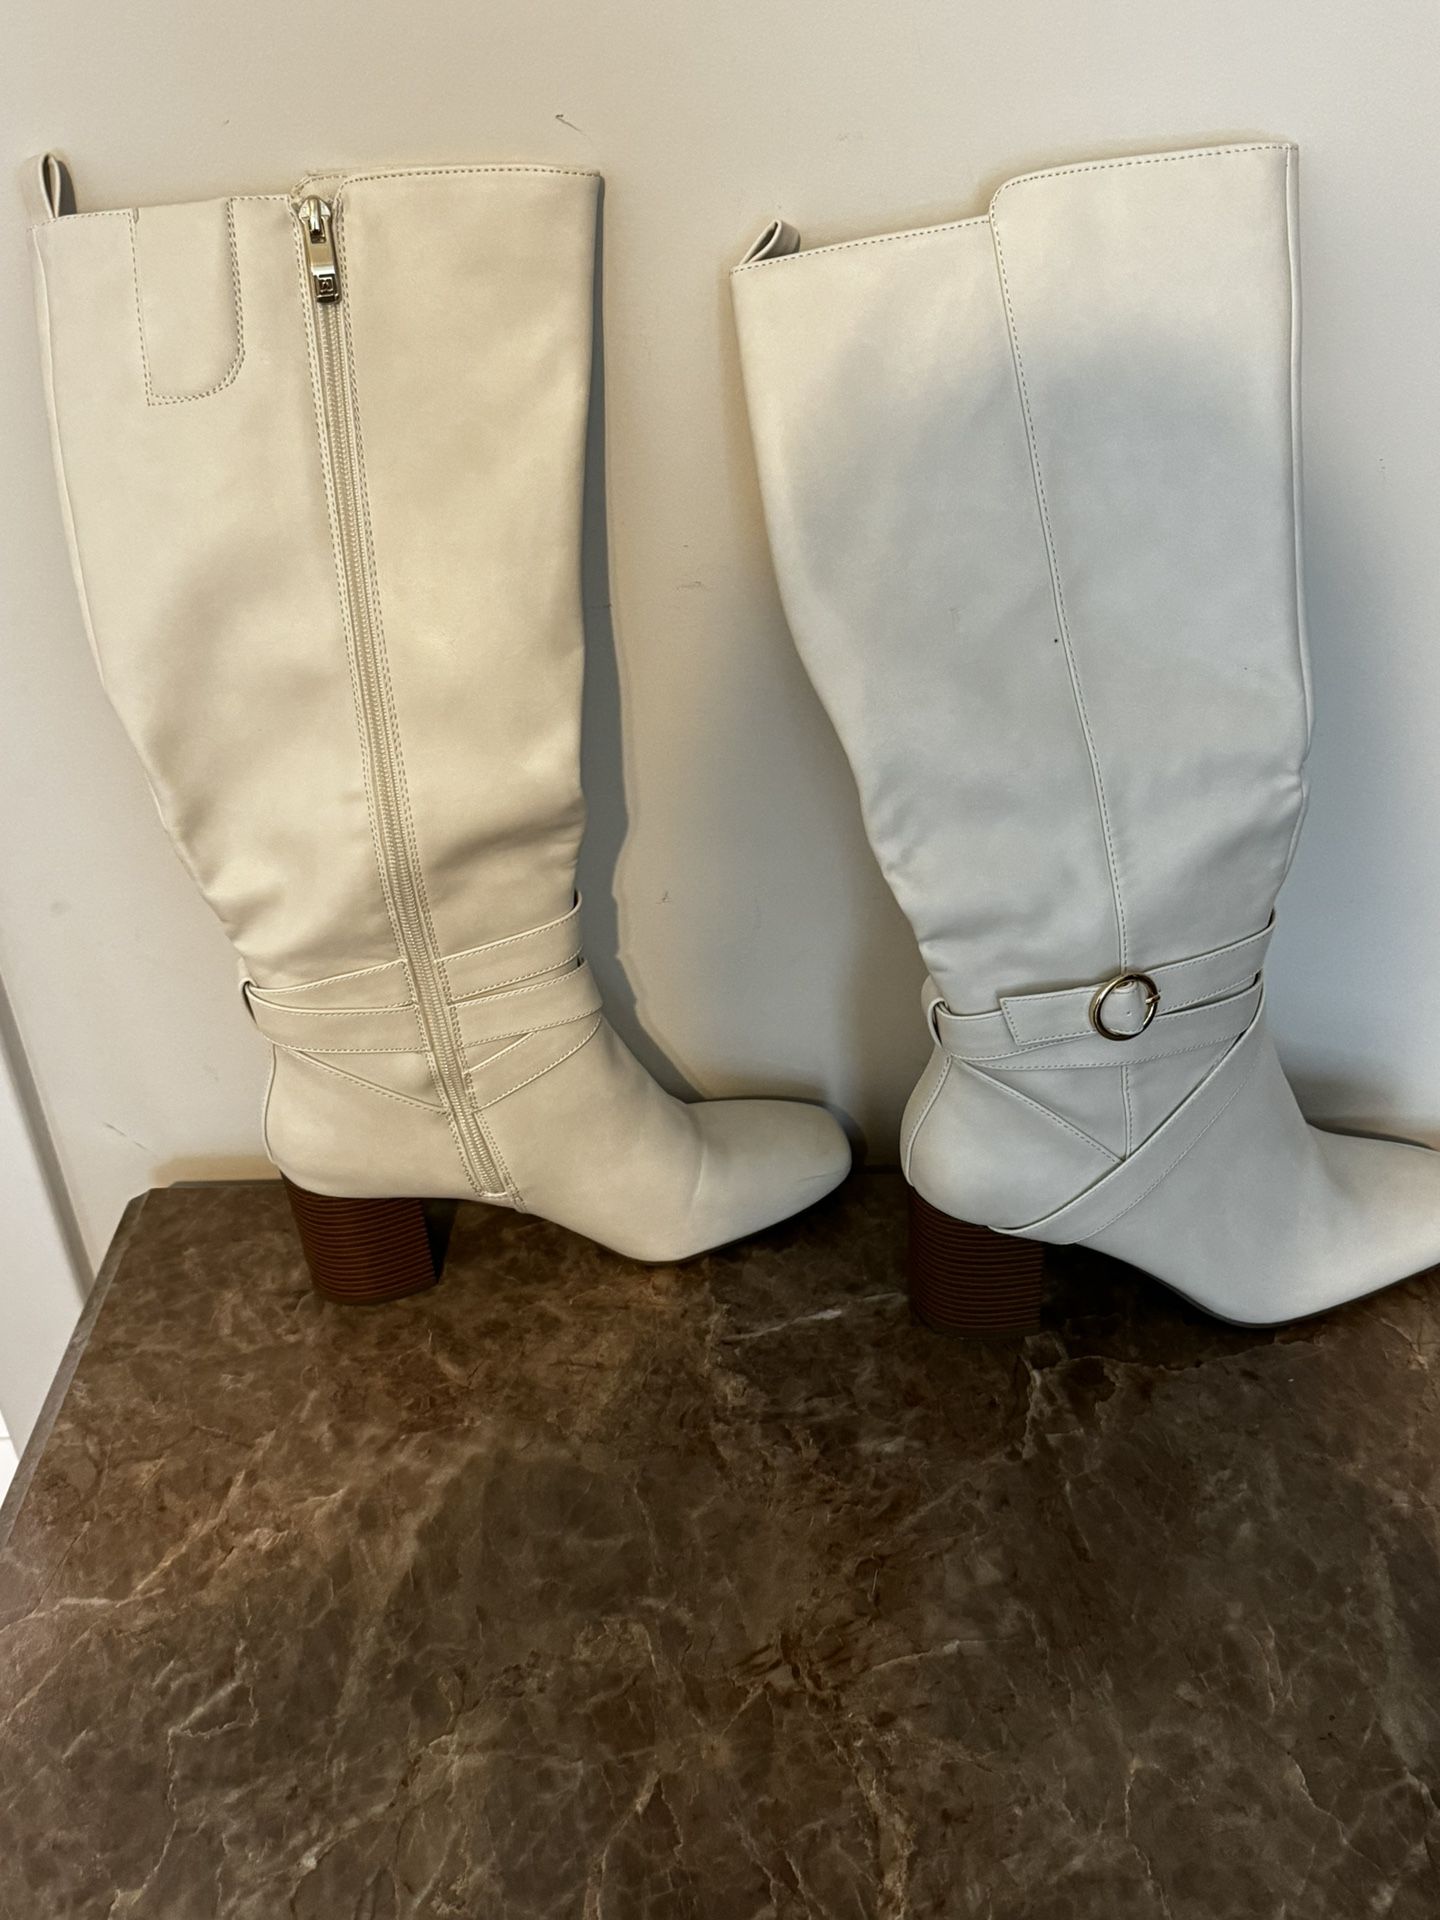 Women’s Brand New Liz Claiborne Boots -Size 8